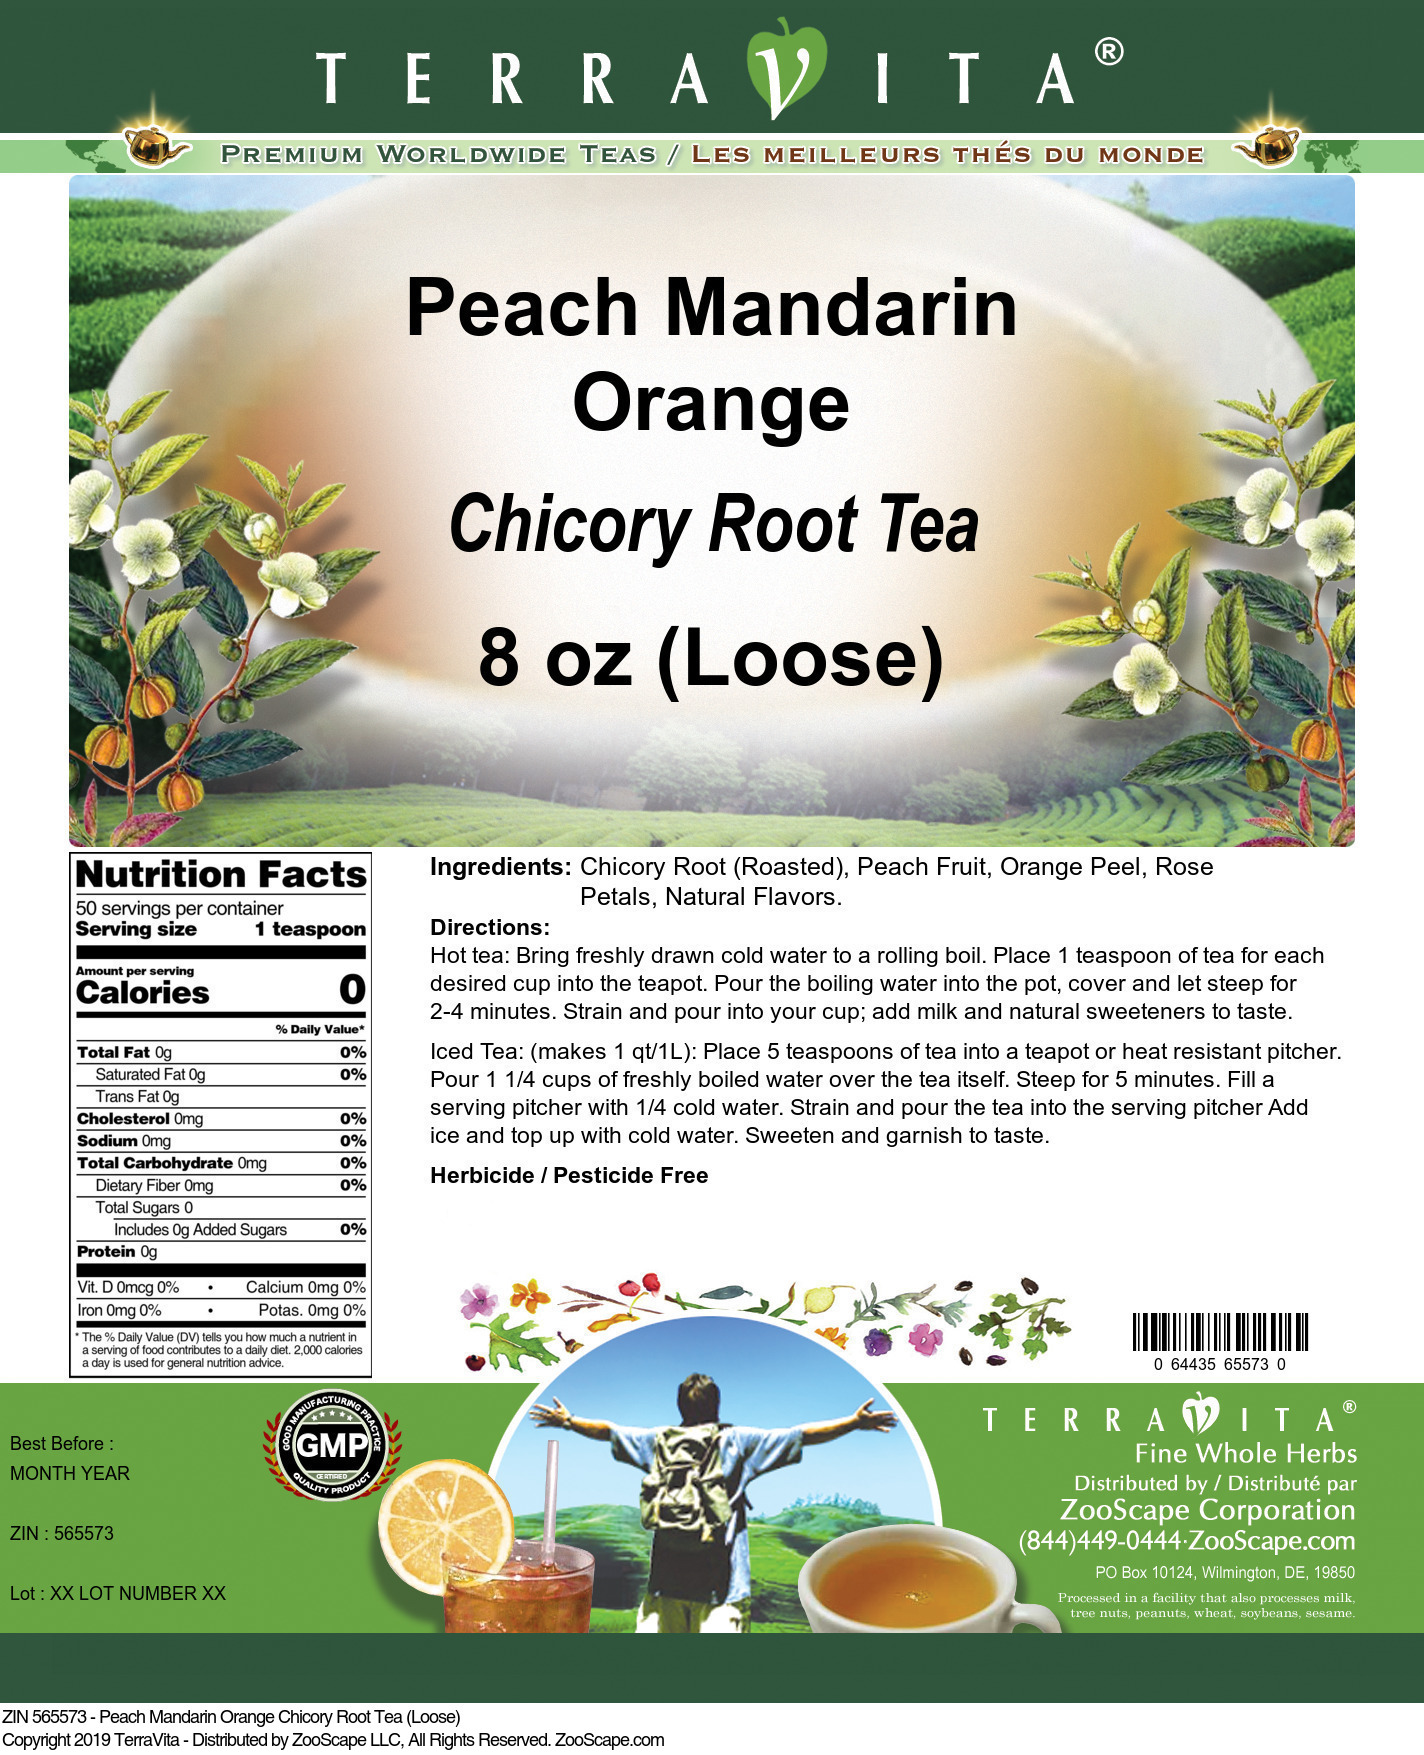 Peach Mandarin Orange Chicory Root Tea (Loose) - Label